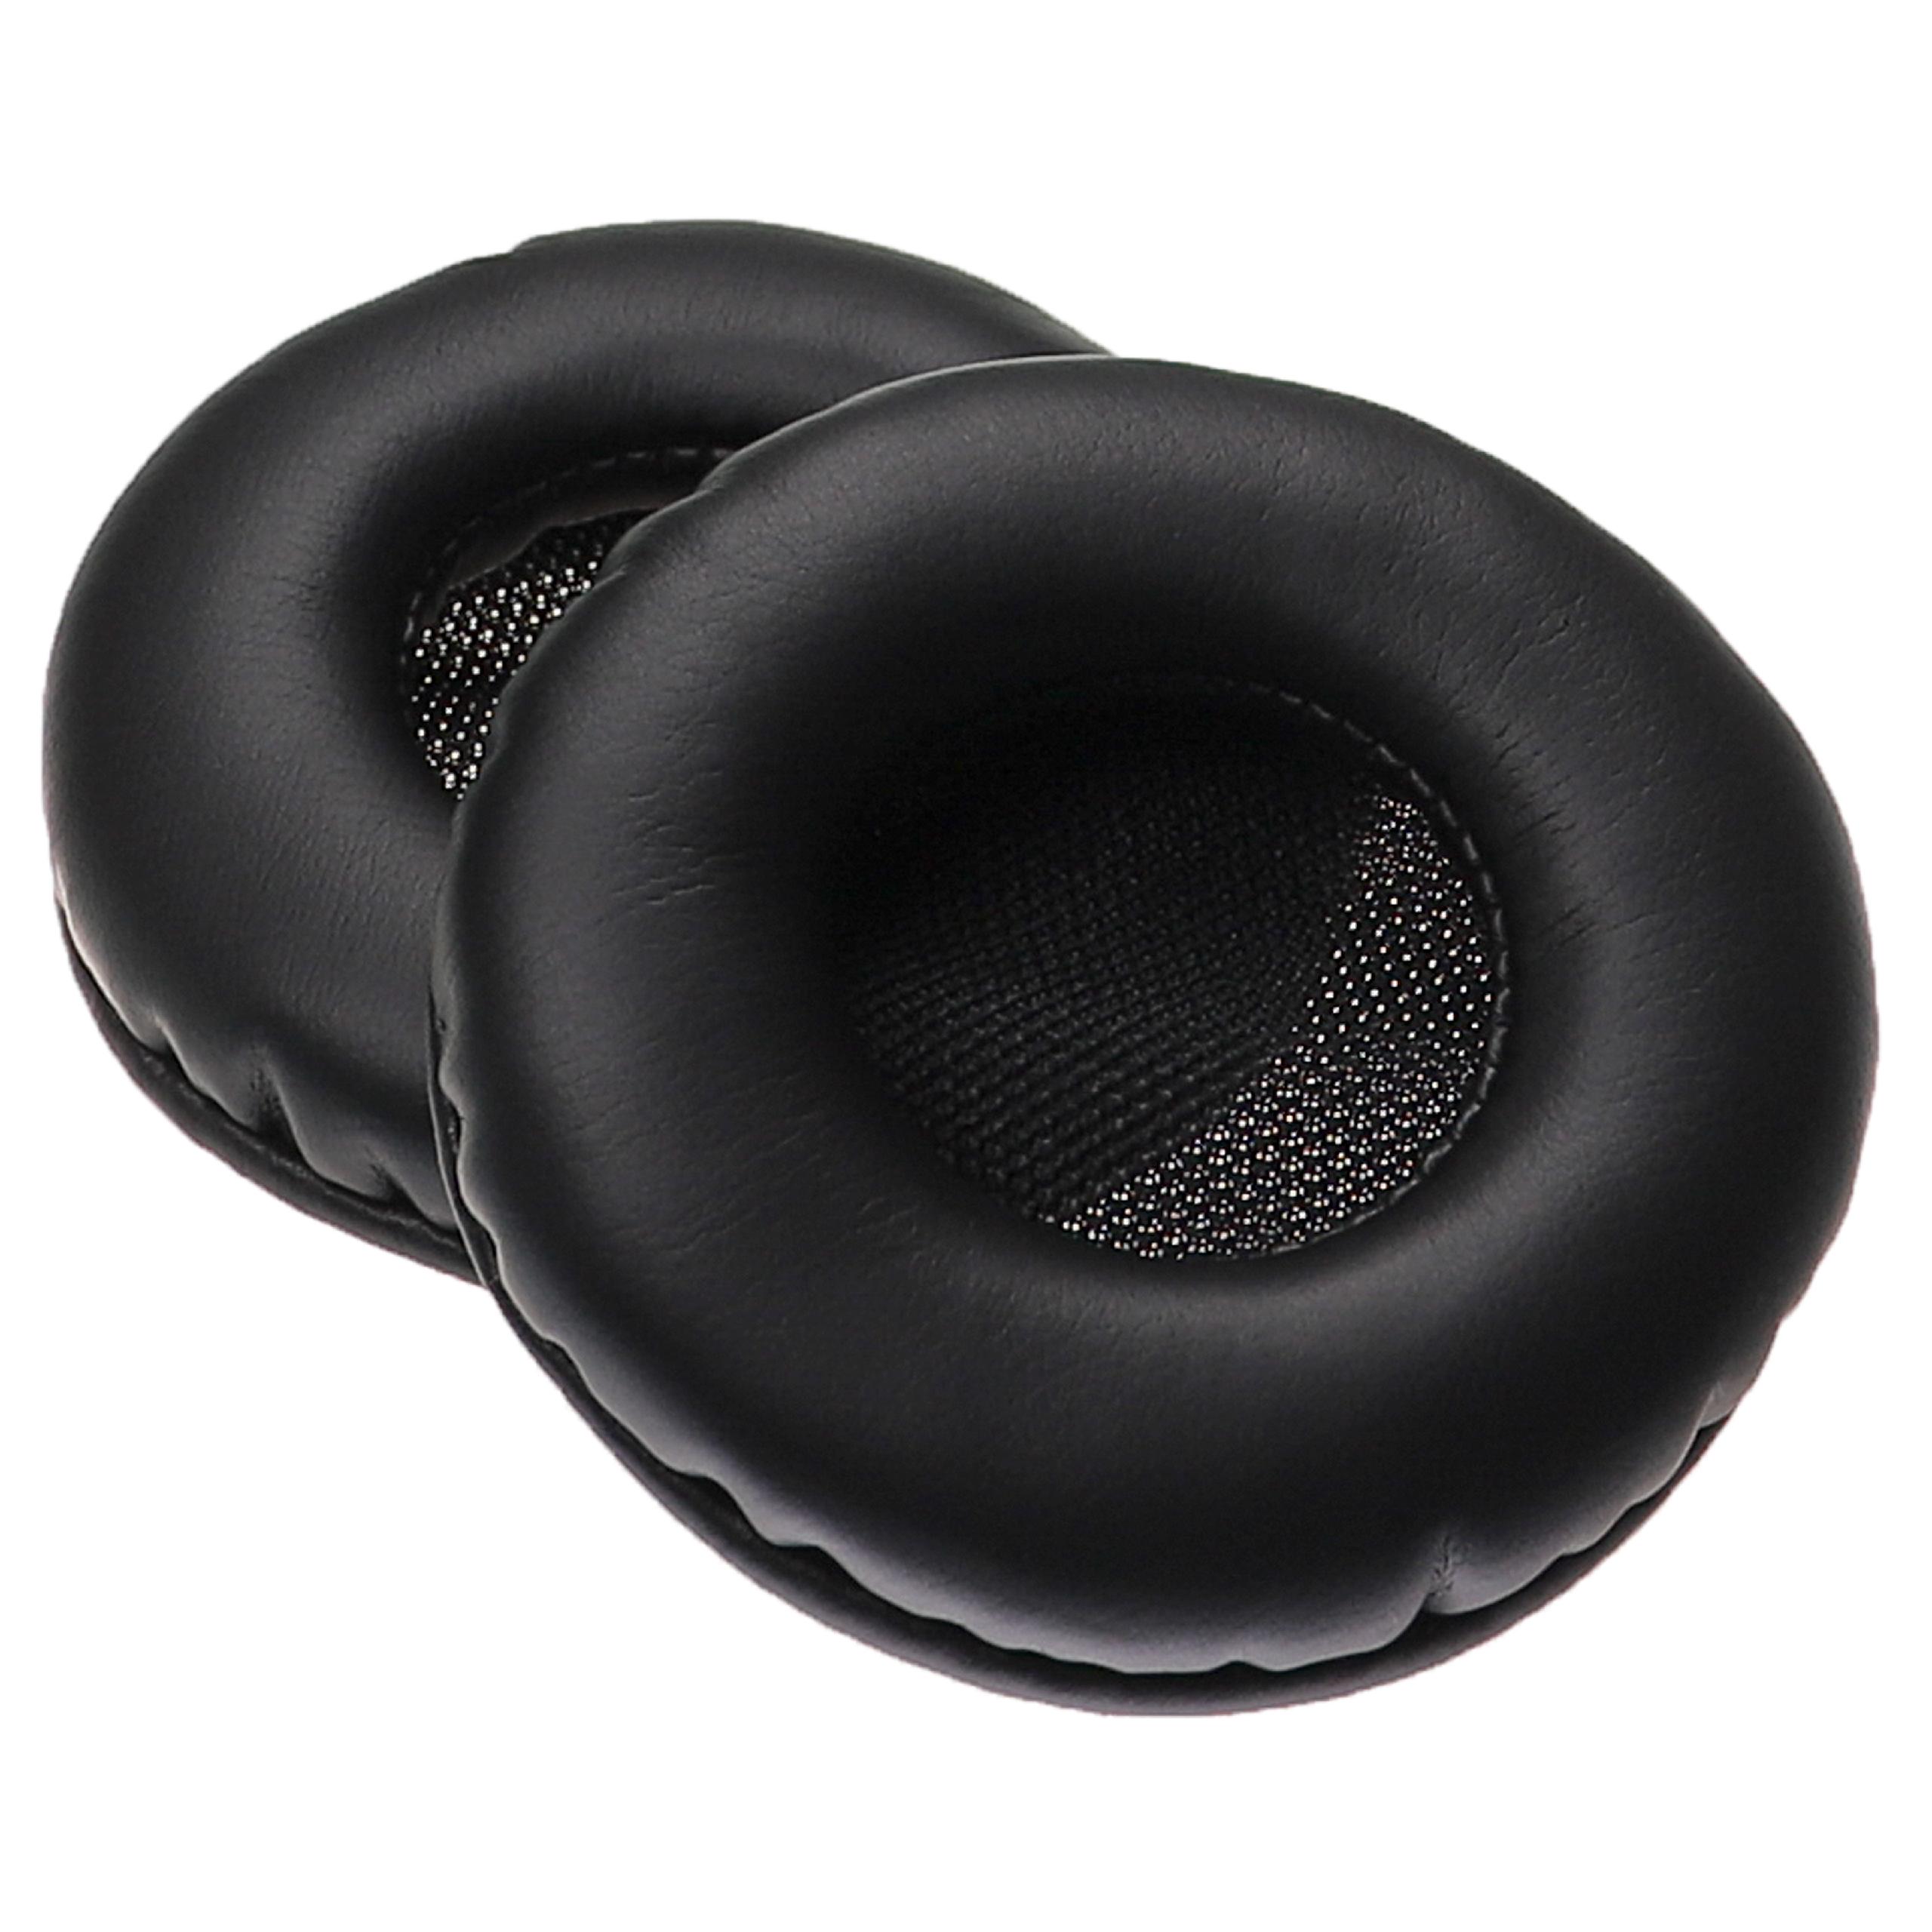 Ohrenpolster für Sony MDR-V100 Kopfhörer u.a., 7,2 x 7 cm, Schwarz